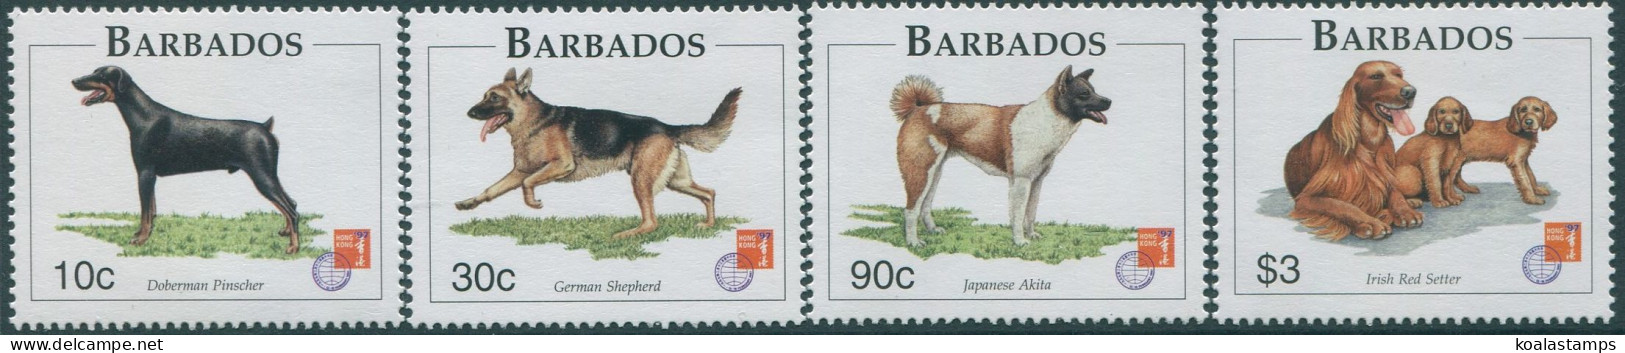 Barbados 1997 SG1101-1104 Hong Kong Stamp Exhibition Dogs Set MNH - Barbados (1966-...)